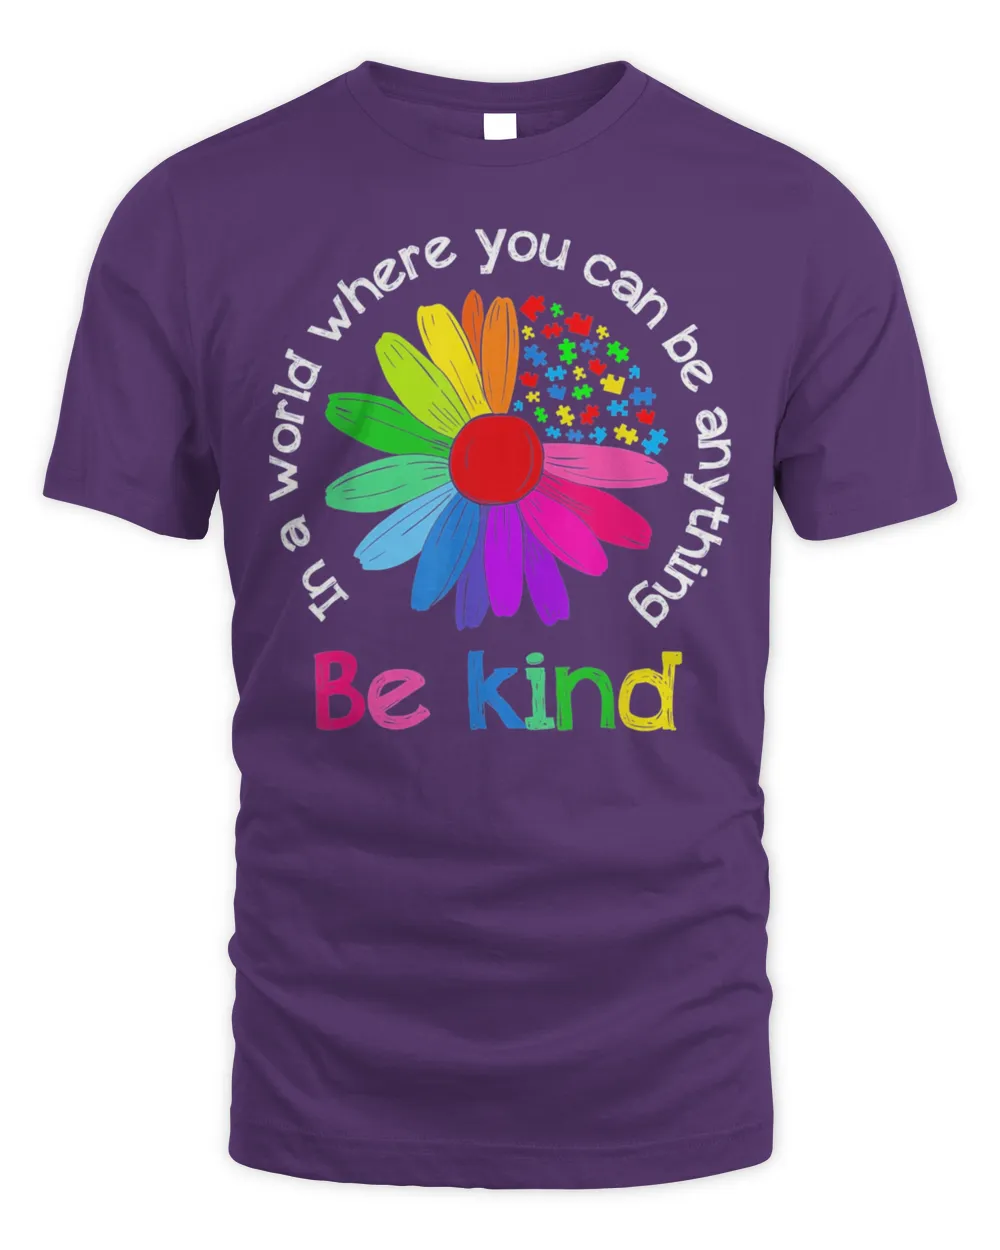 Be Kind Love Kindness Autism Mental Health Awareness Shirt